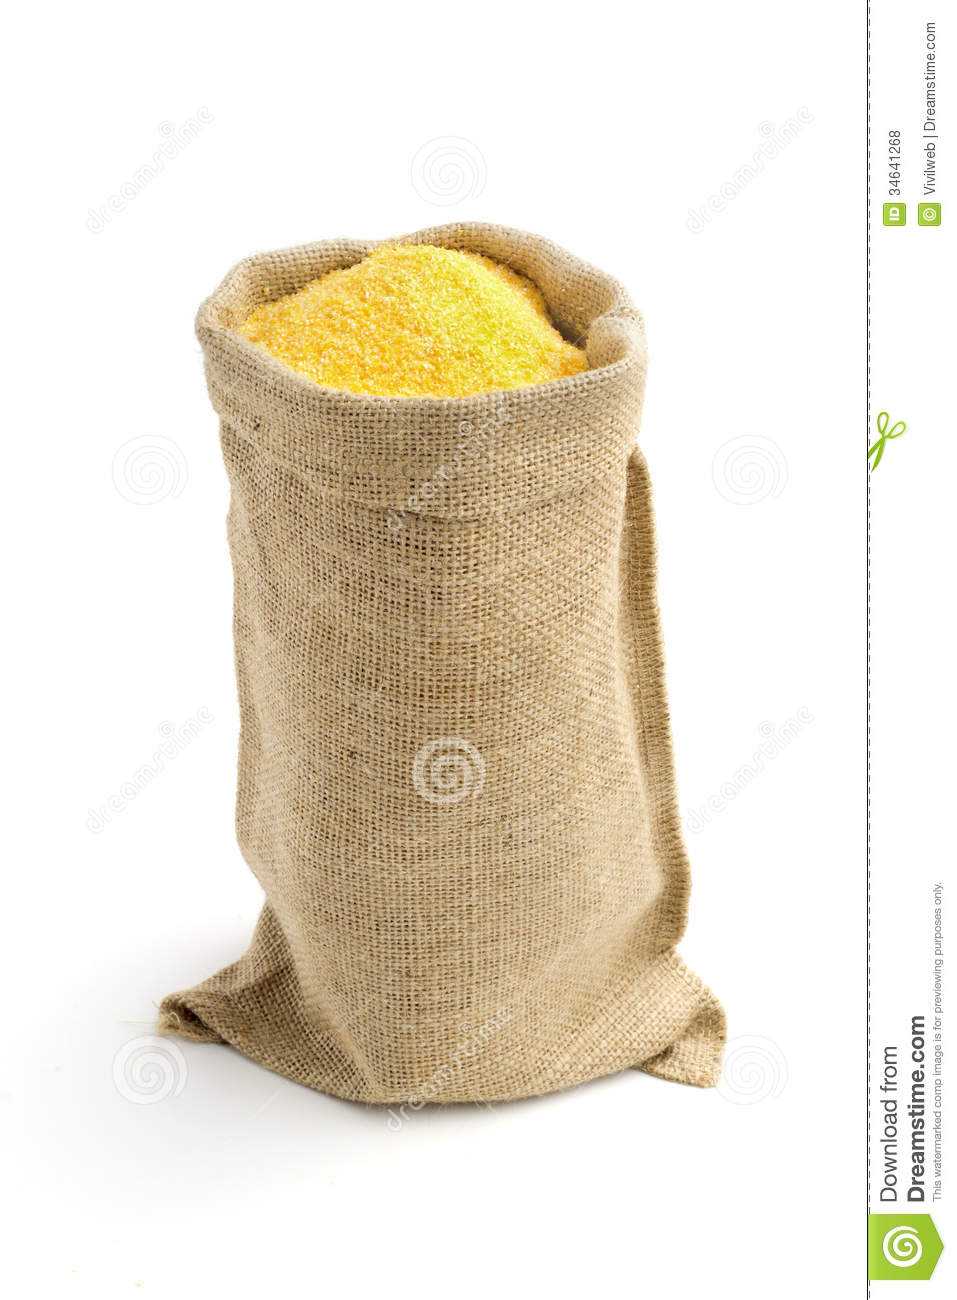 Jute Sack Full Of Corn Flour Royalty Free Stock Photos   Image    